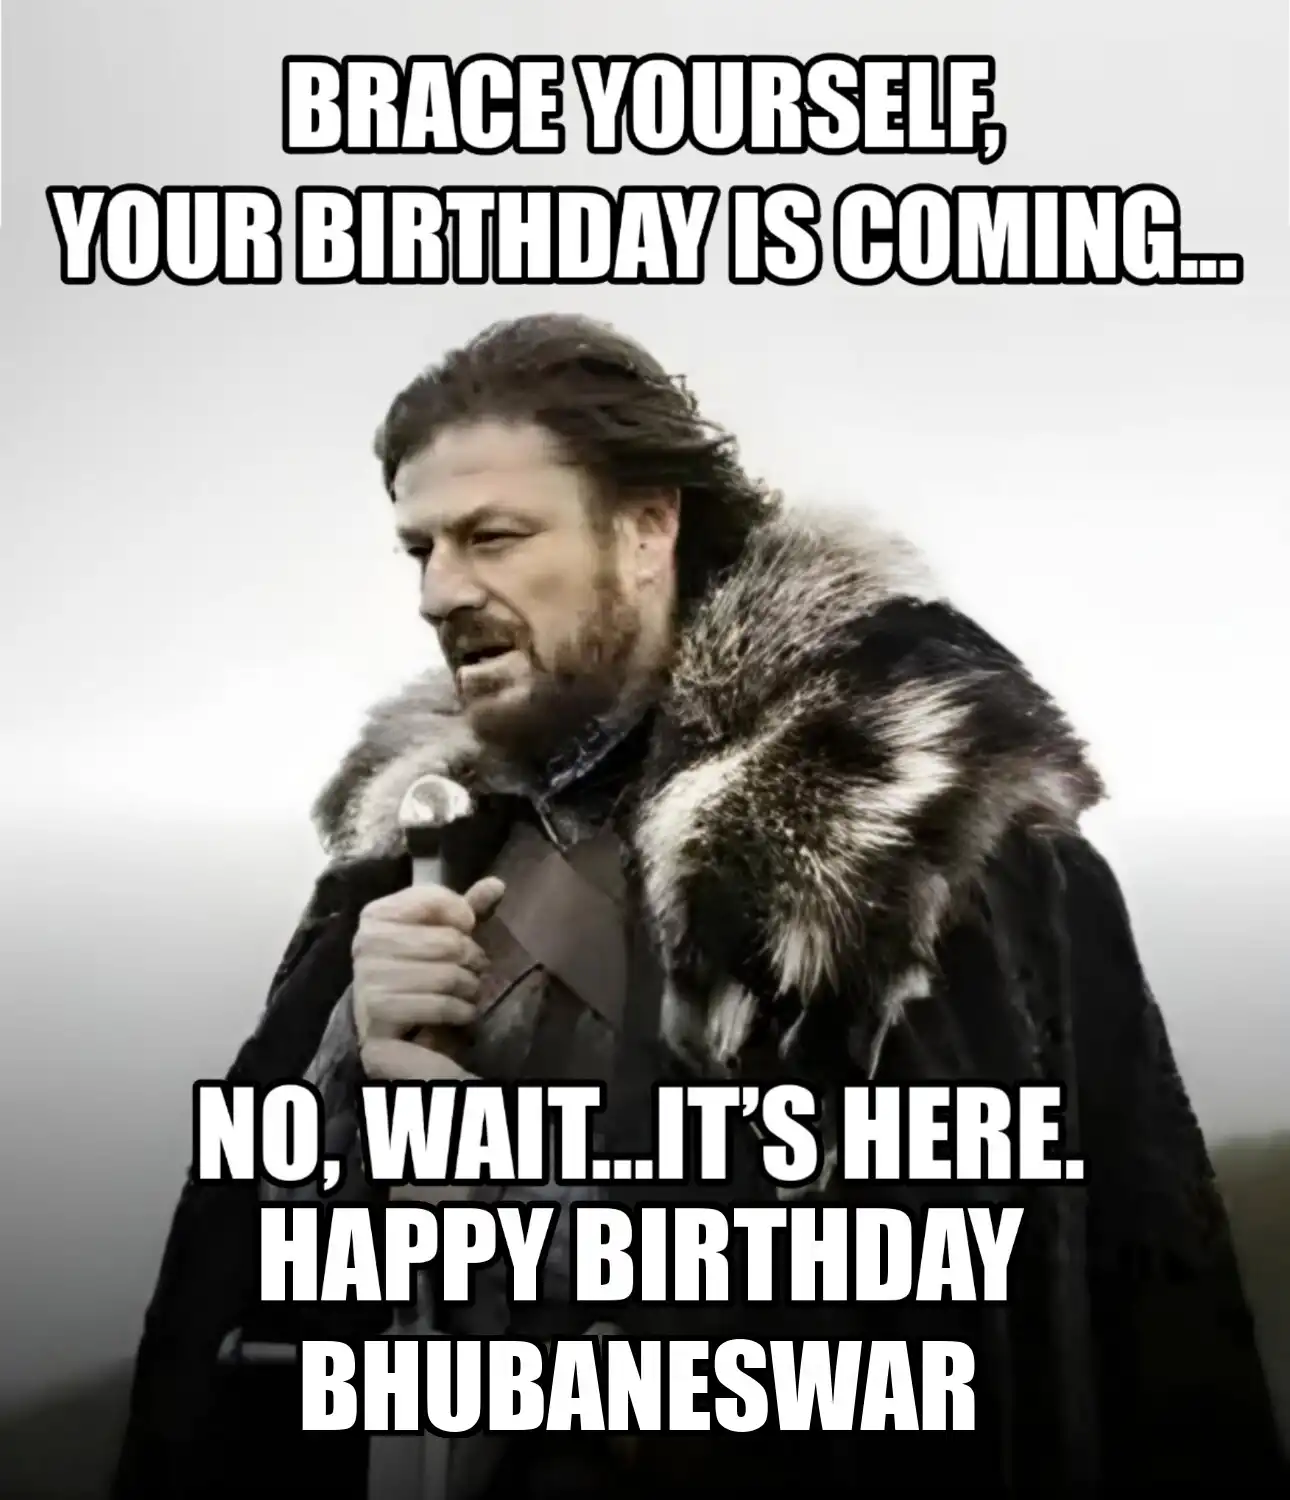 Happy Birthday Bhubaneswar Brace Yourself Your Birthday Is Coming Meme